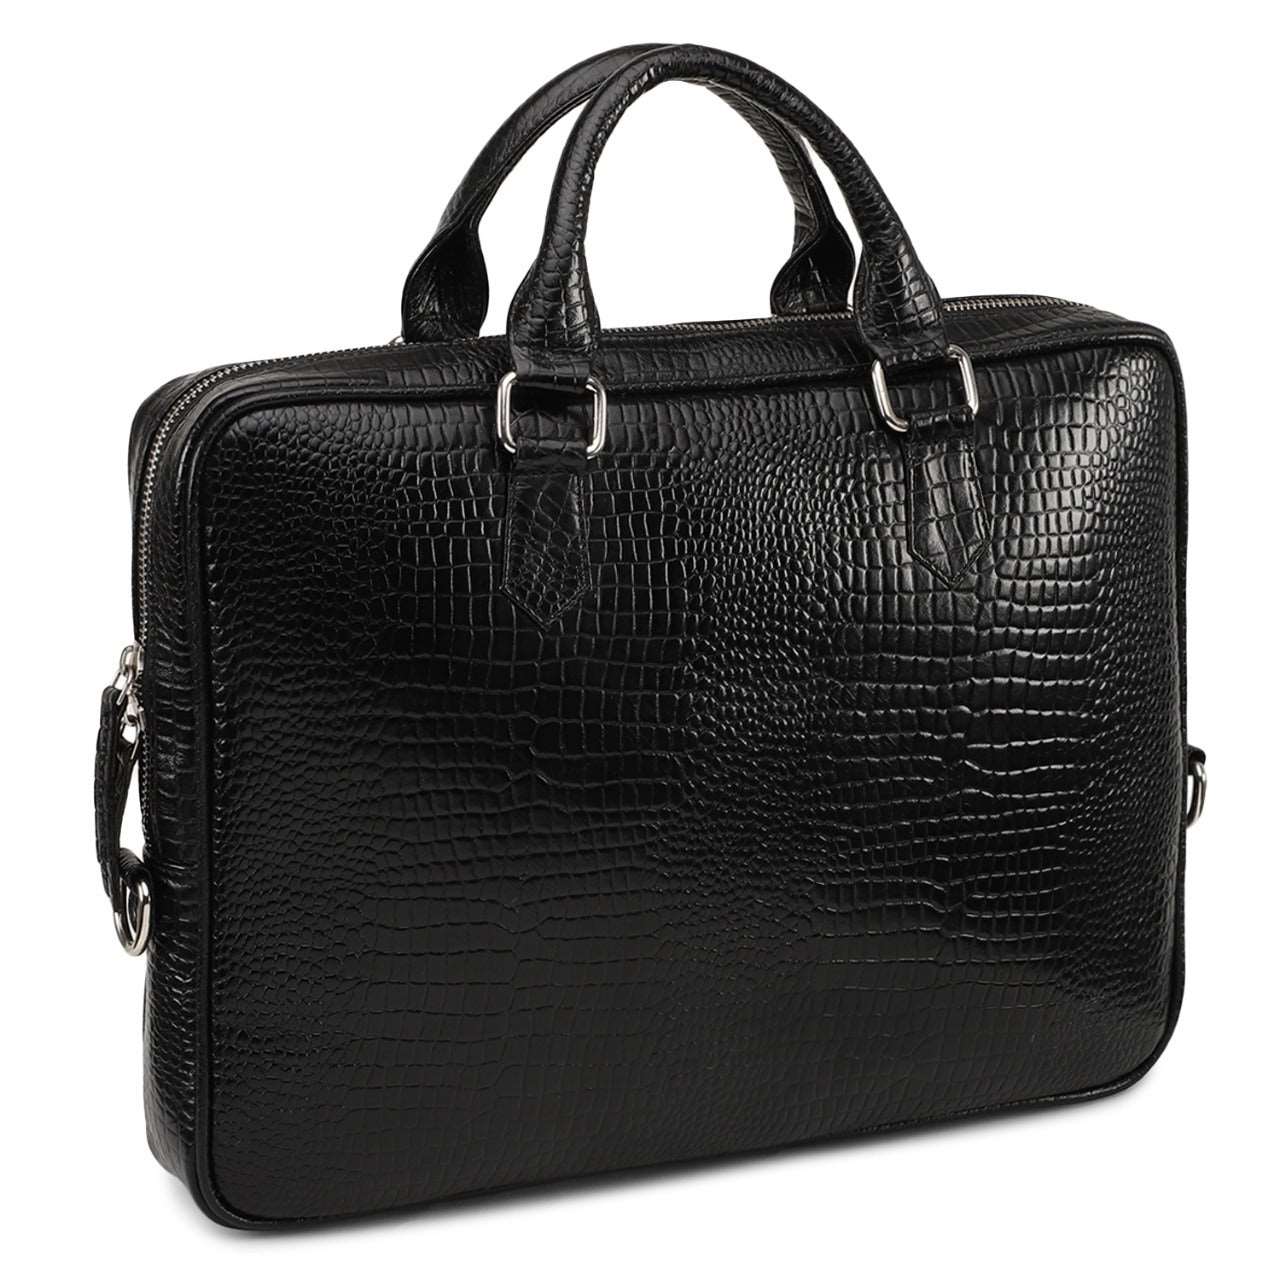 ALEXANDER MCQUEEN: Slash leather bag - Fuchsia | Alexander McQueen shoulder  bag 732794DYTCC online at GIGLIO.COM